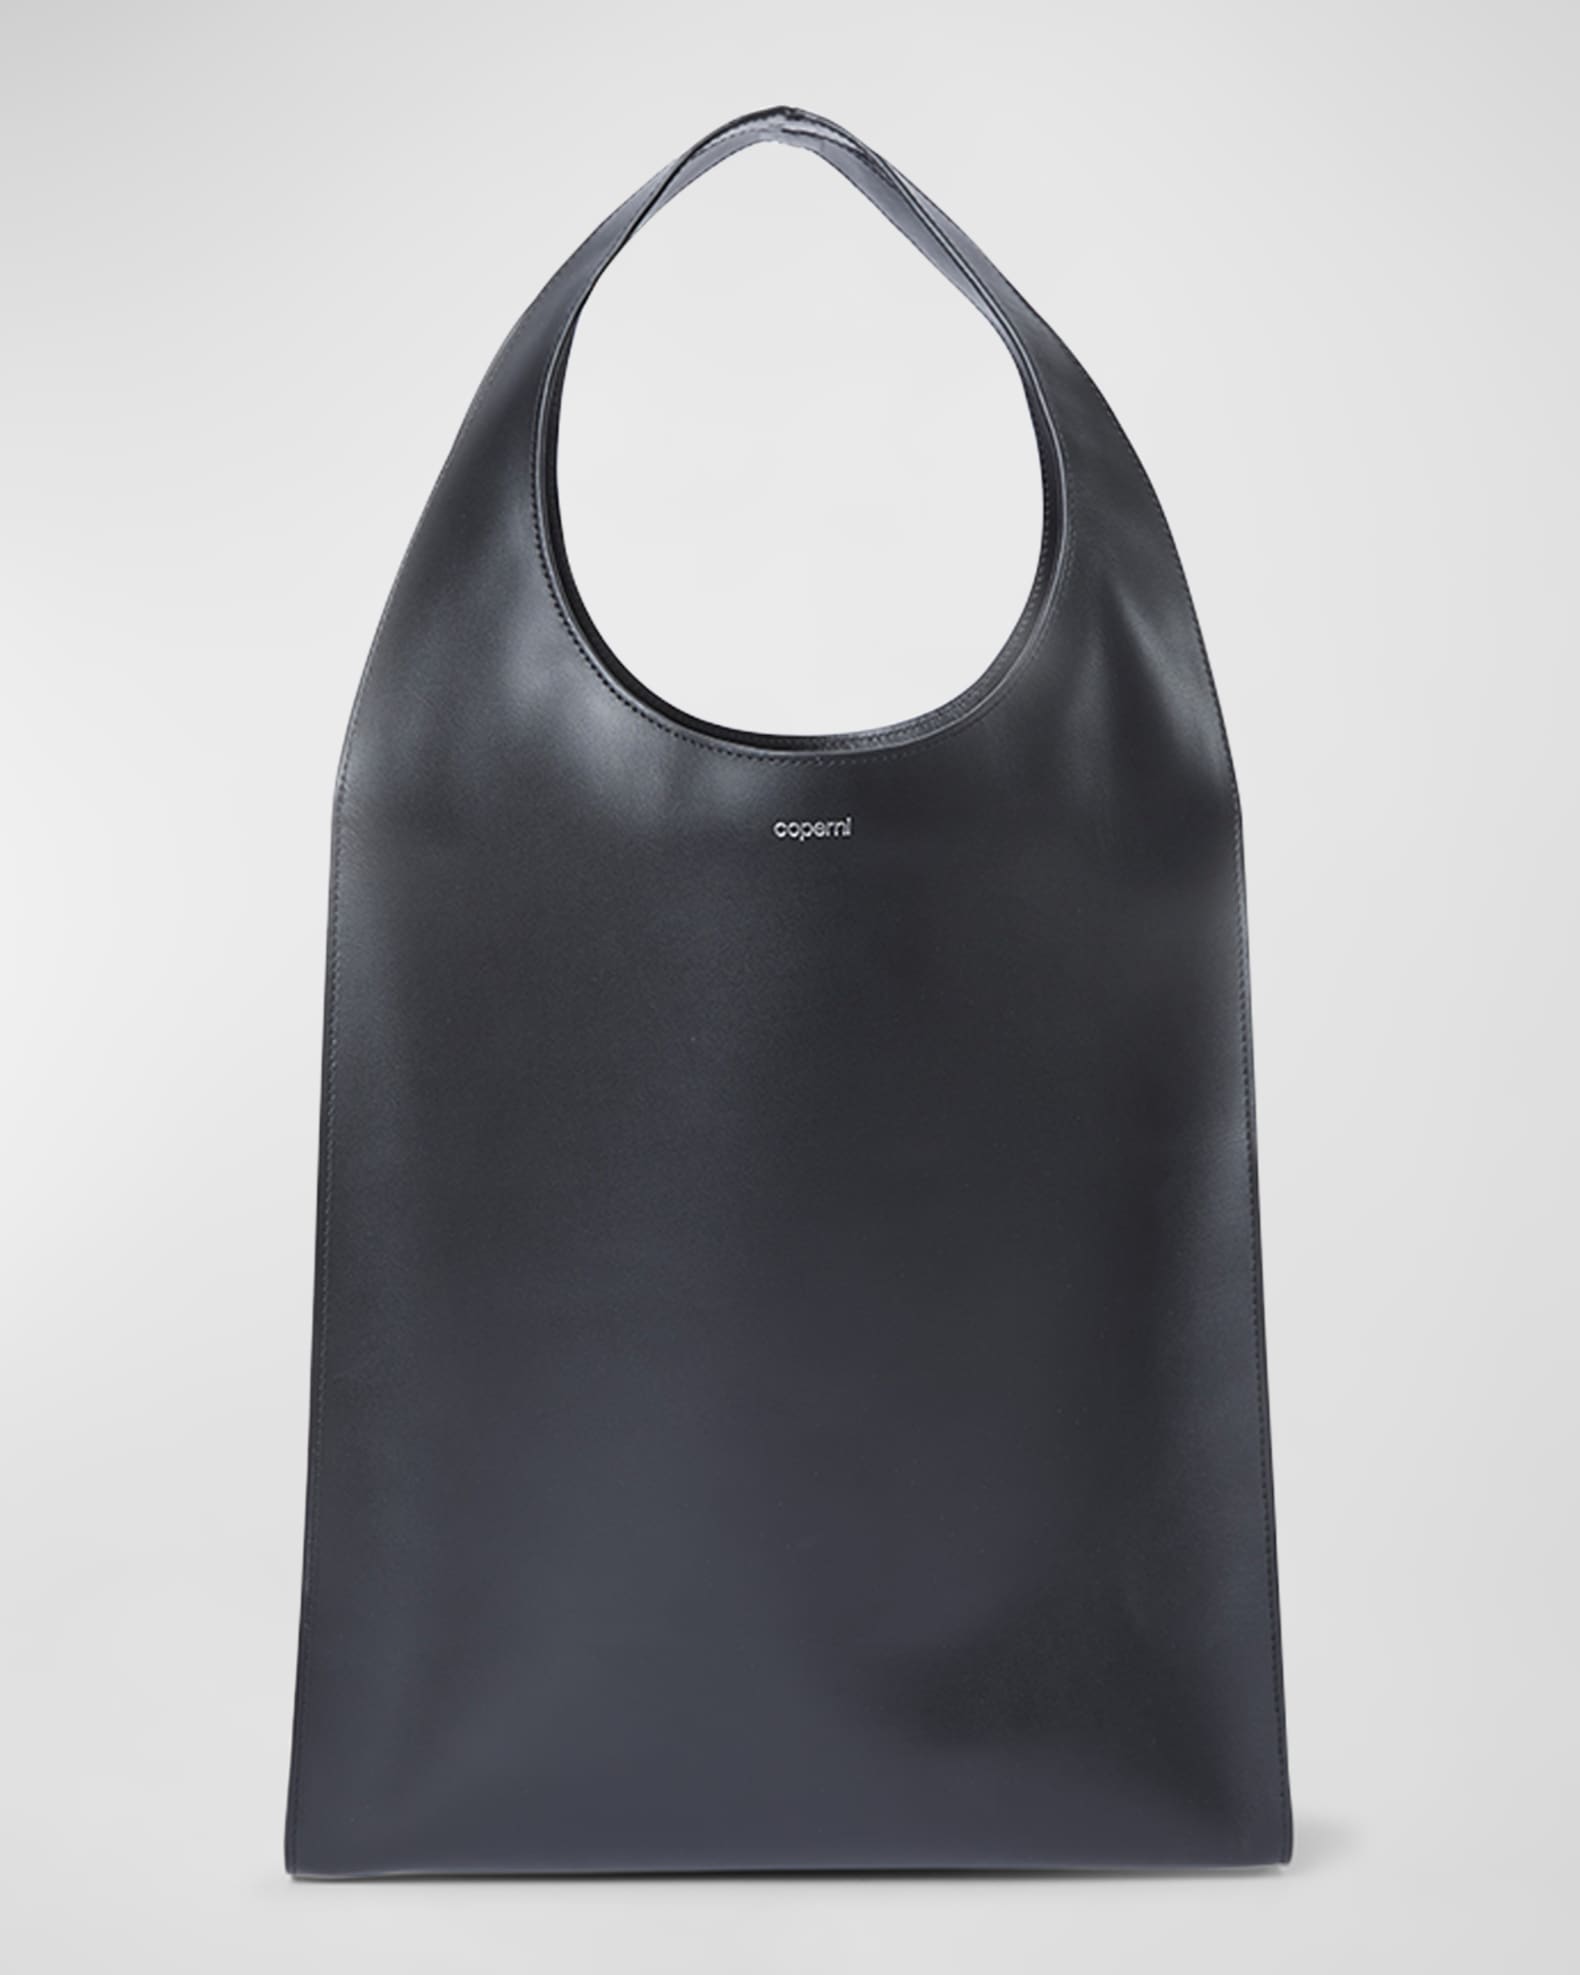 Coperni Swipe Calf Leather Tote Bag | Neiman Marcus